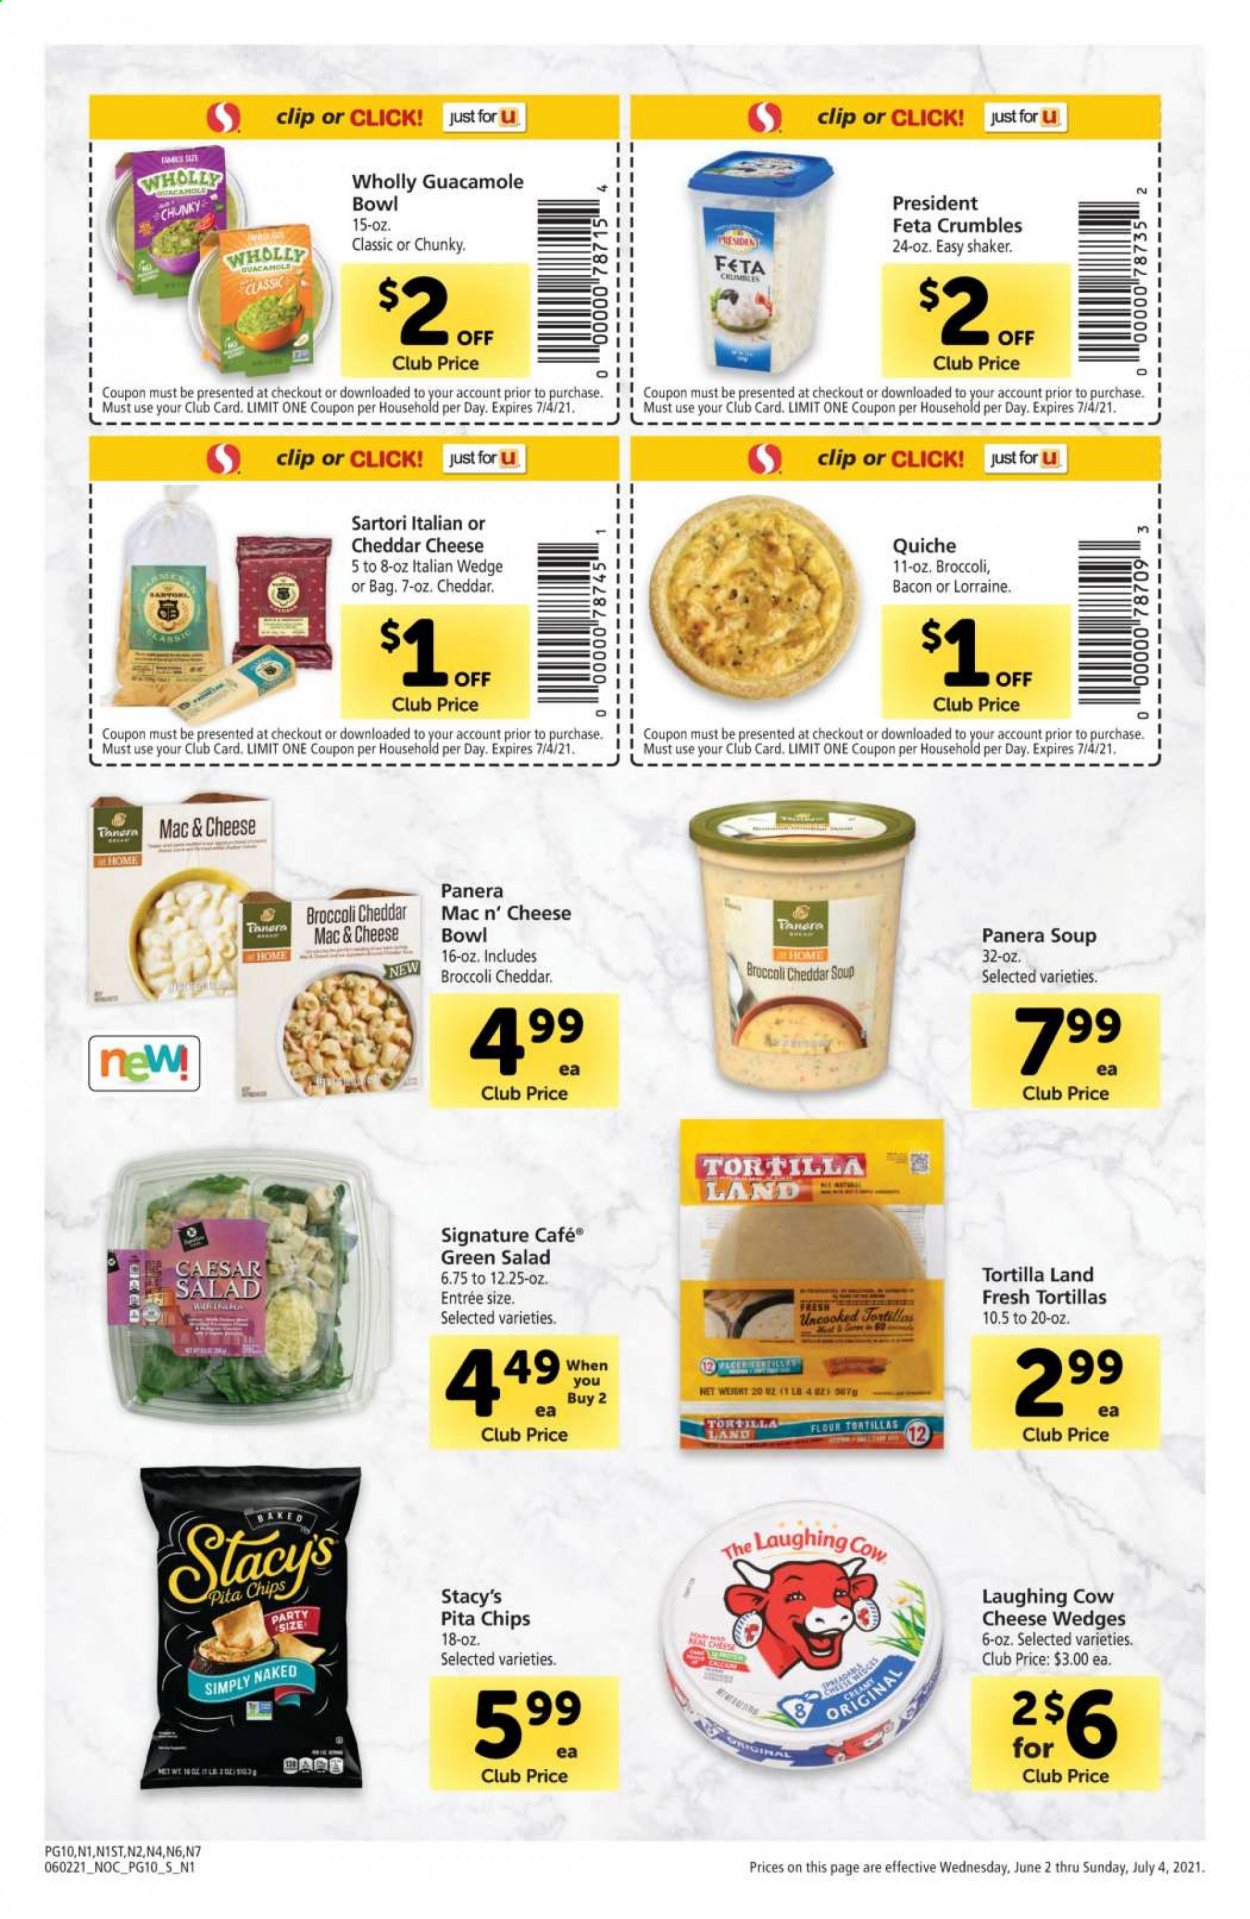 thumbnail - Safeway Flyer - 06/02/2021 - 07/04/2021 - Sales products - tortillas, flour tortillas, broccoli, soup, bacon, The Laughing Cow, Président, feta, quiche, chips, pita chips, guacamole, bowl. Page 10.